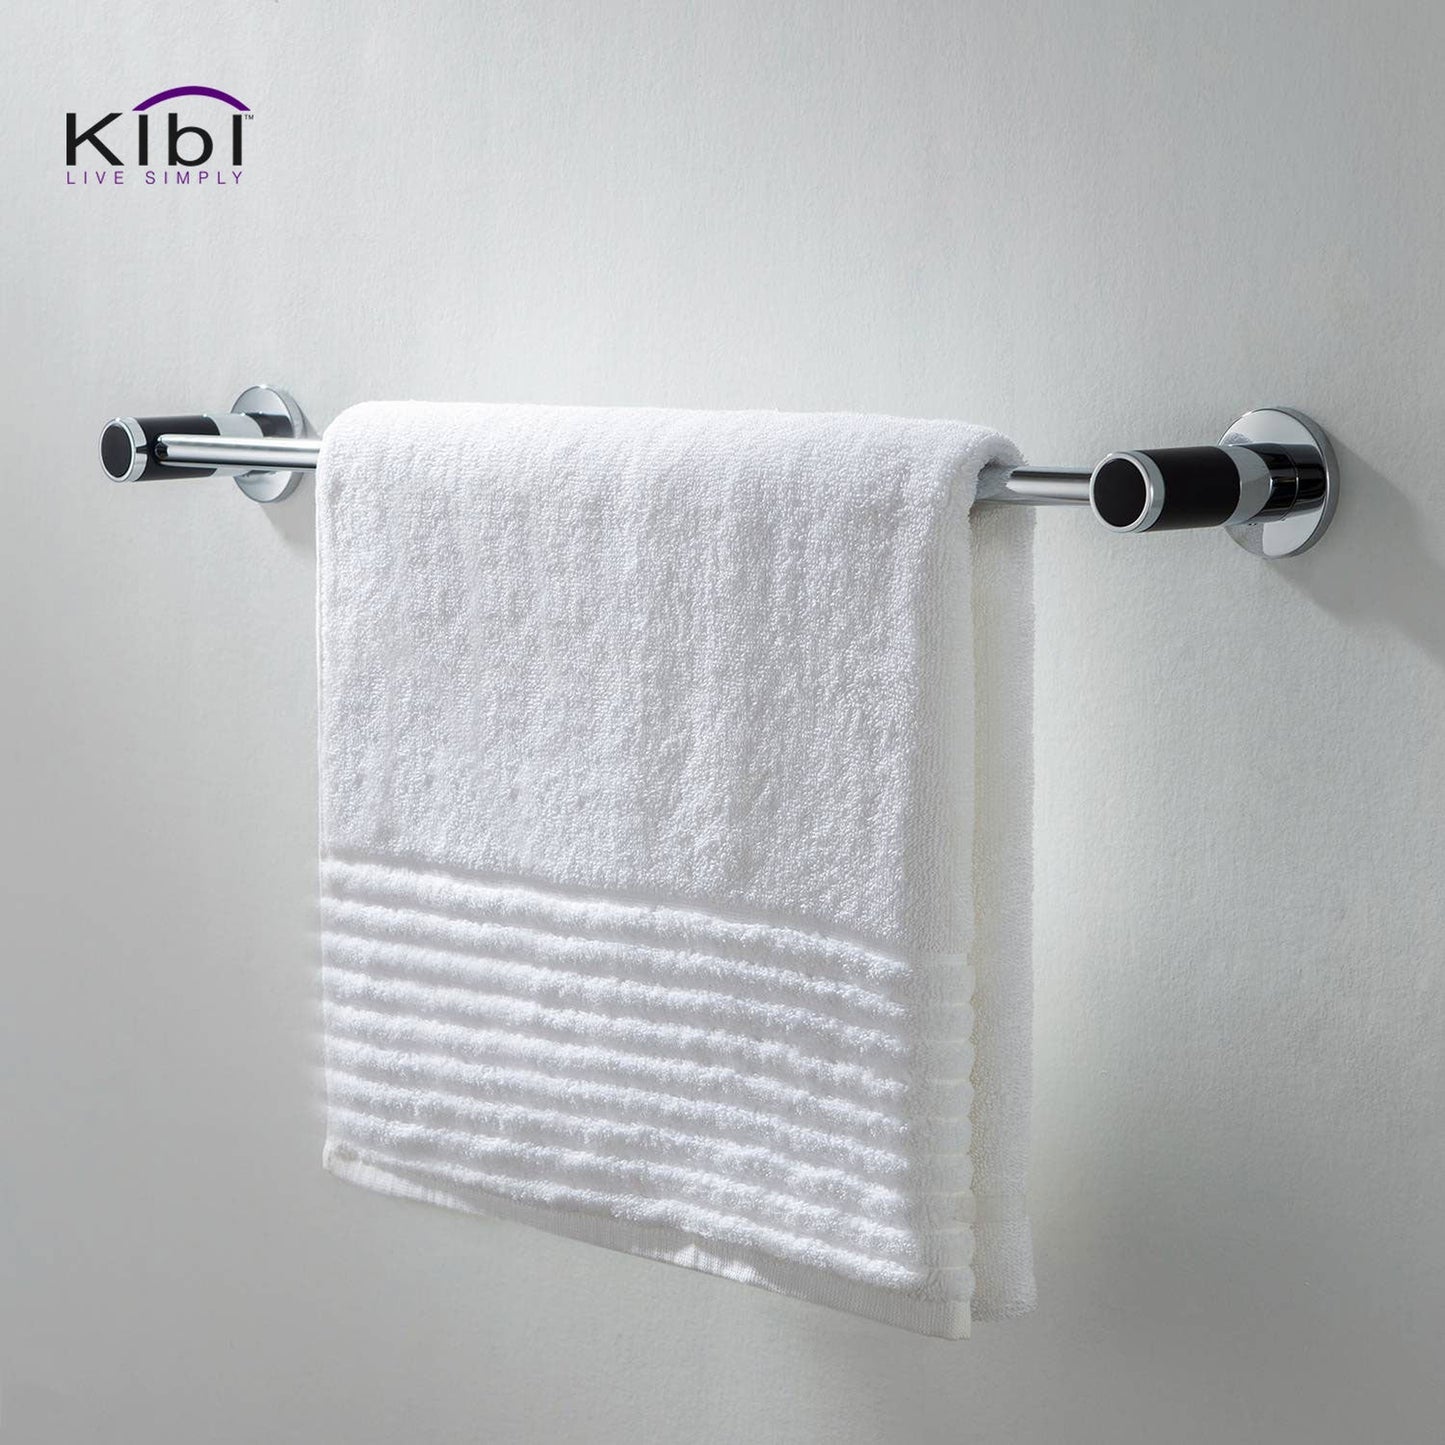 KIBI Abaco Bathroom Towel Bar in Chrome Black Finish